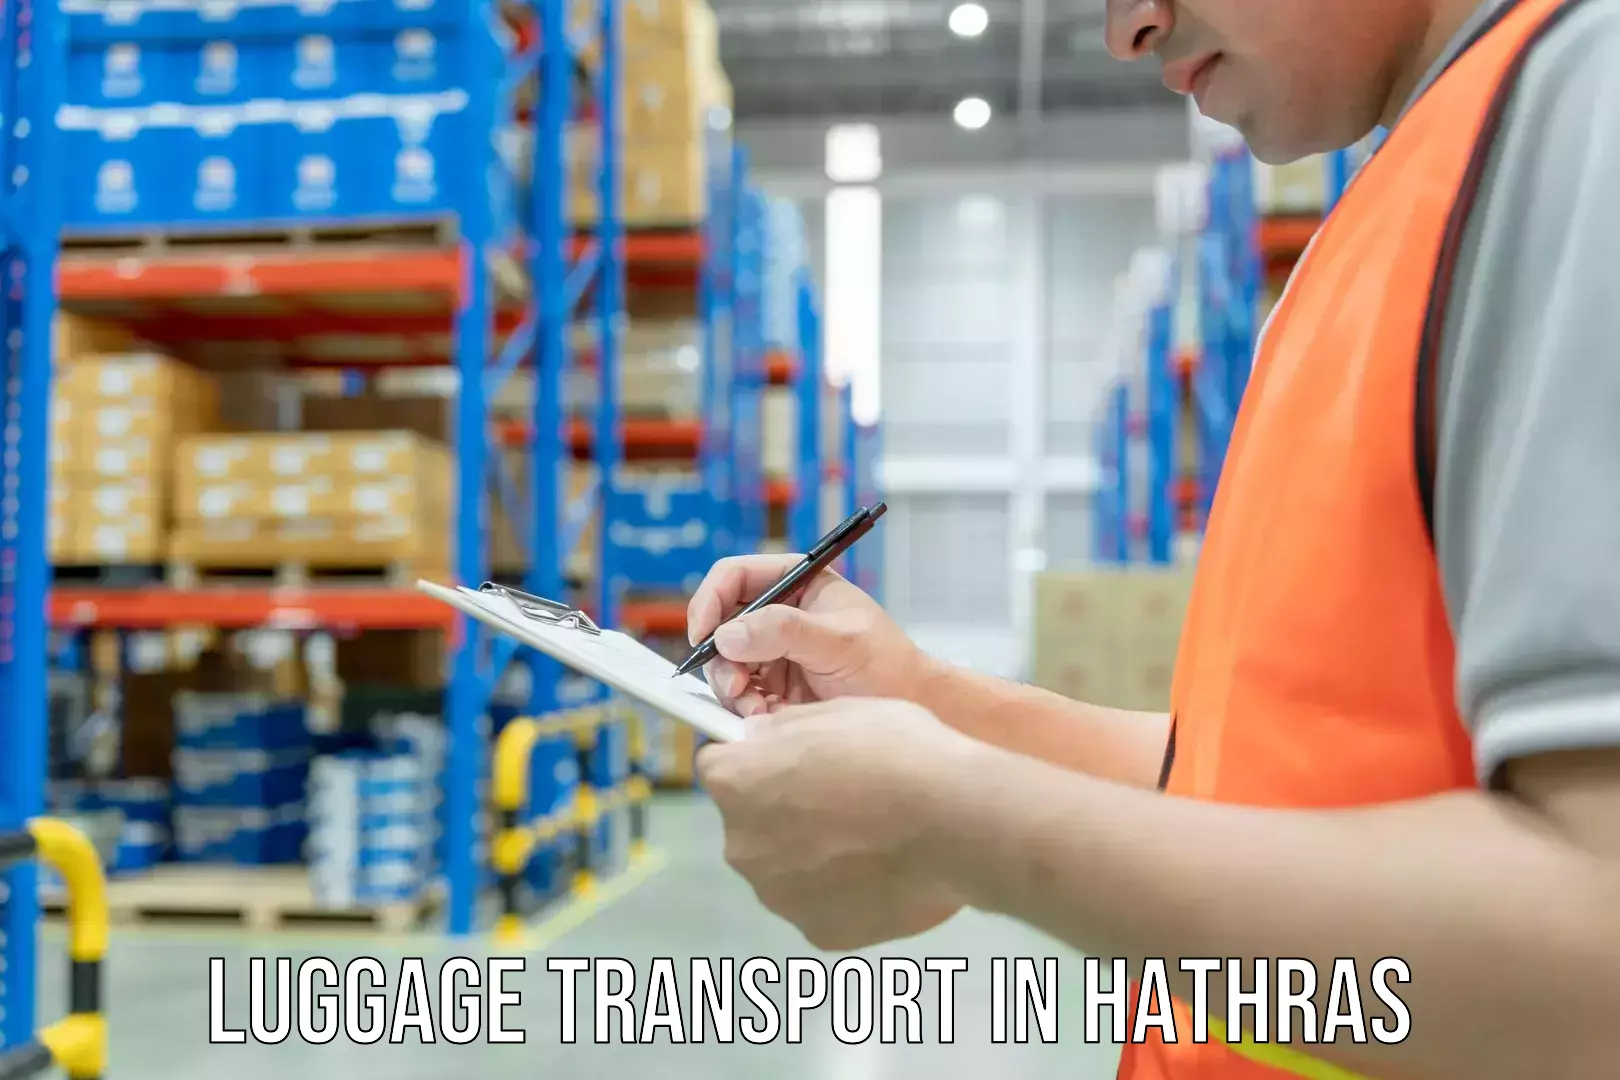 Luggage shipment strategy in Hathras